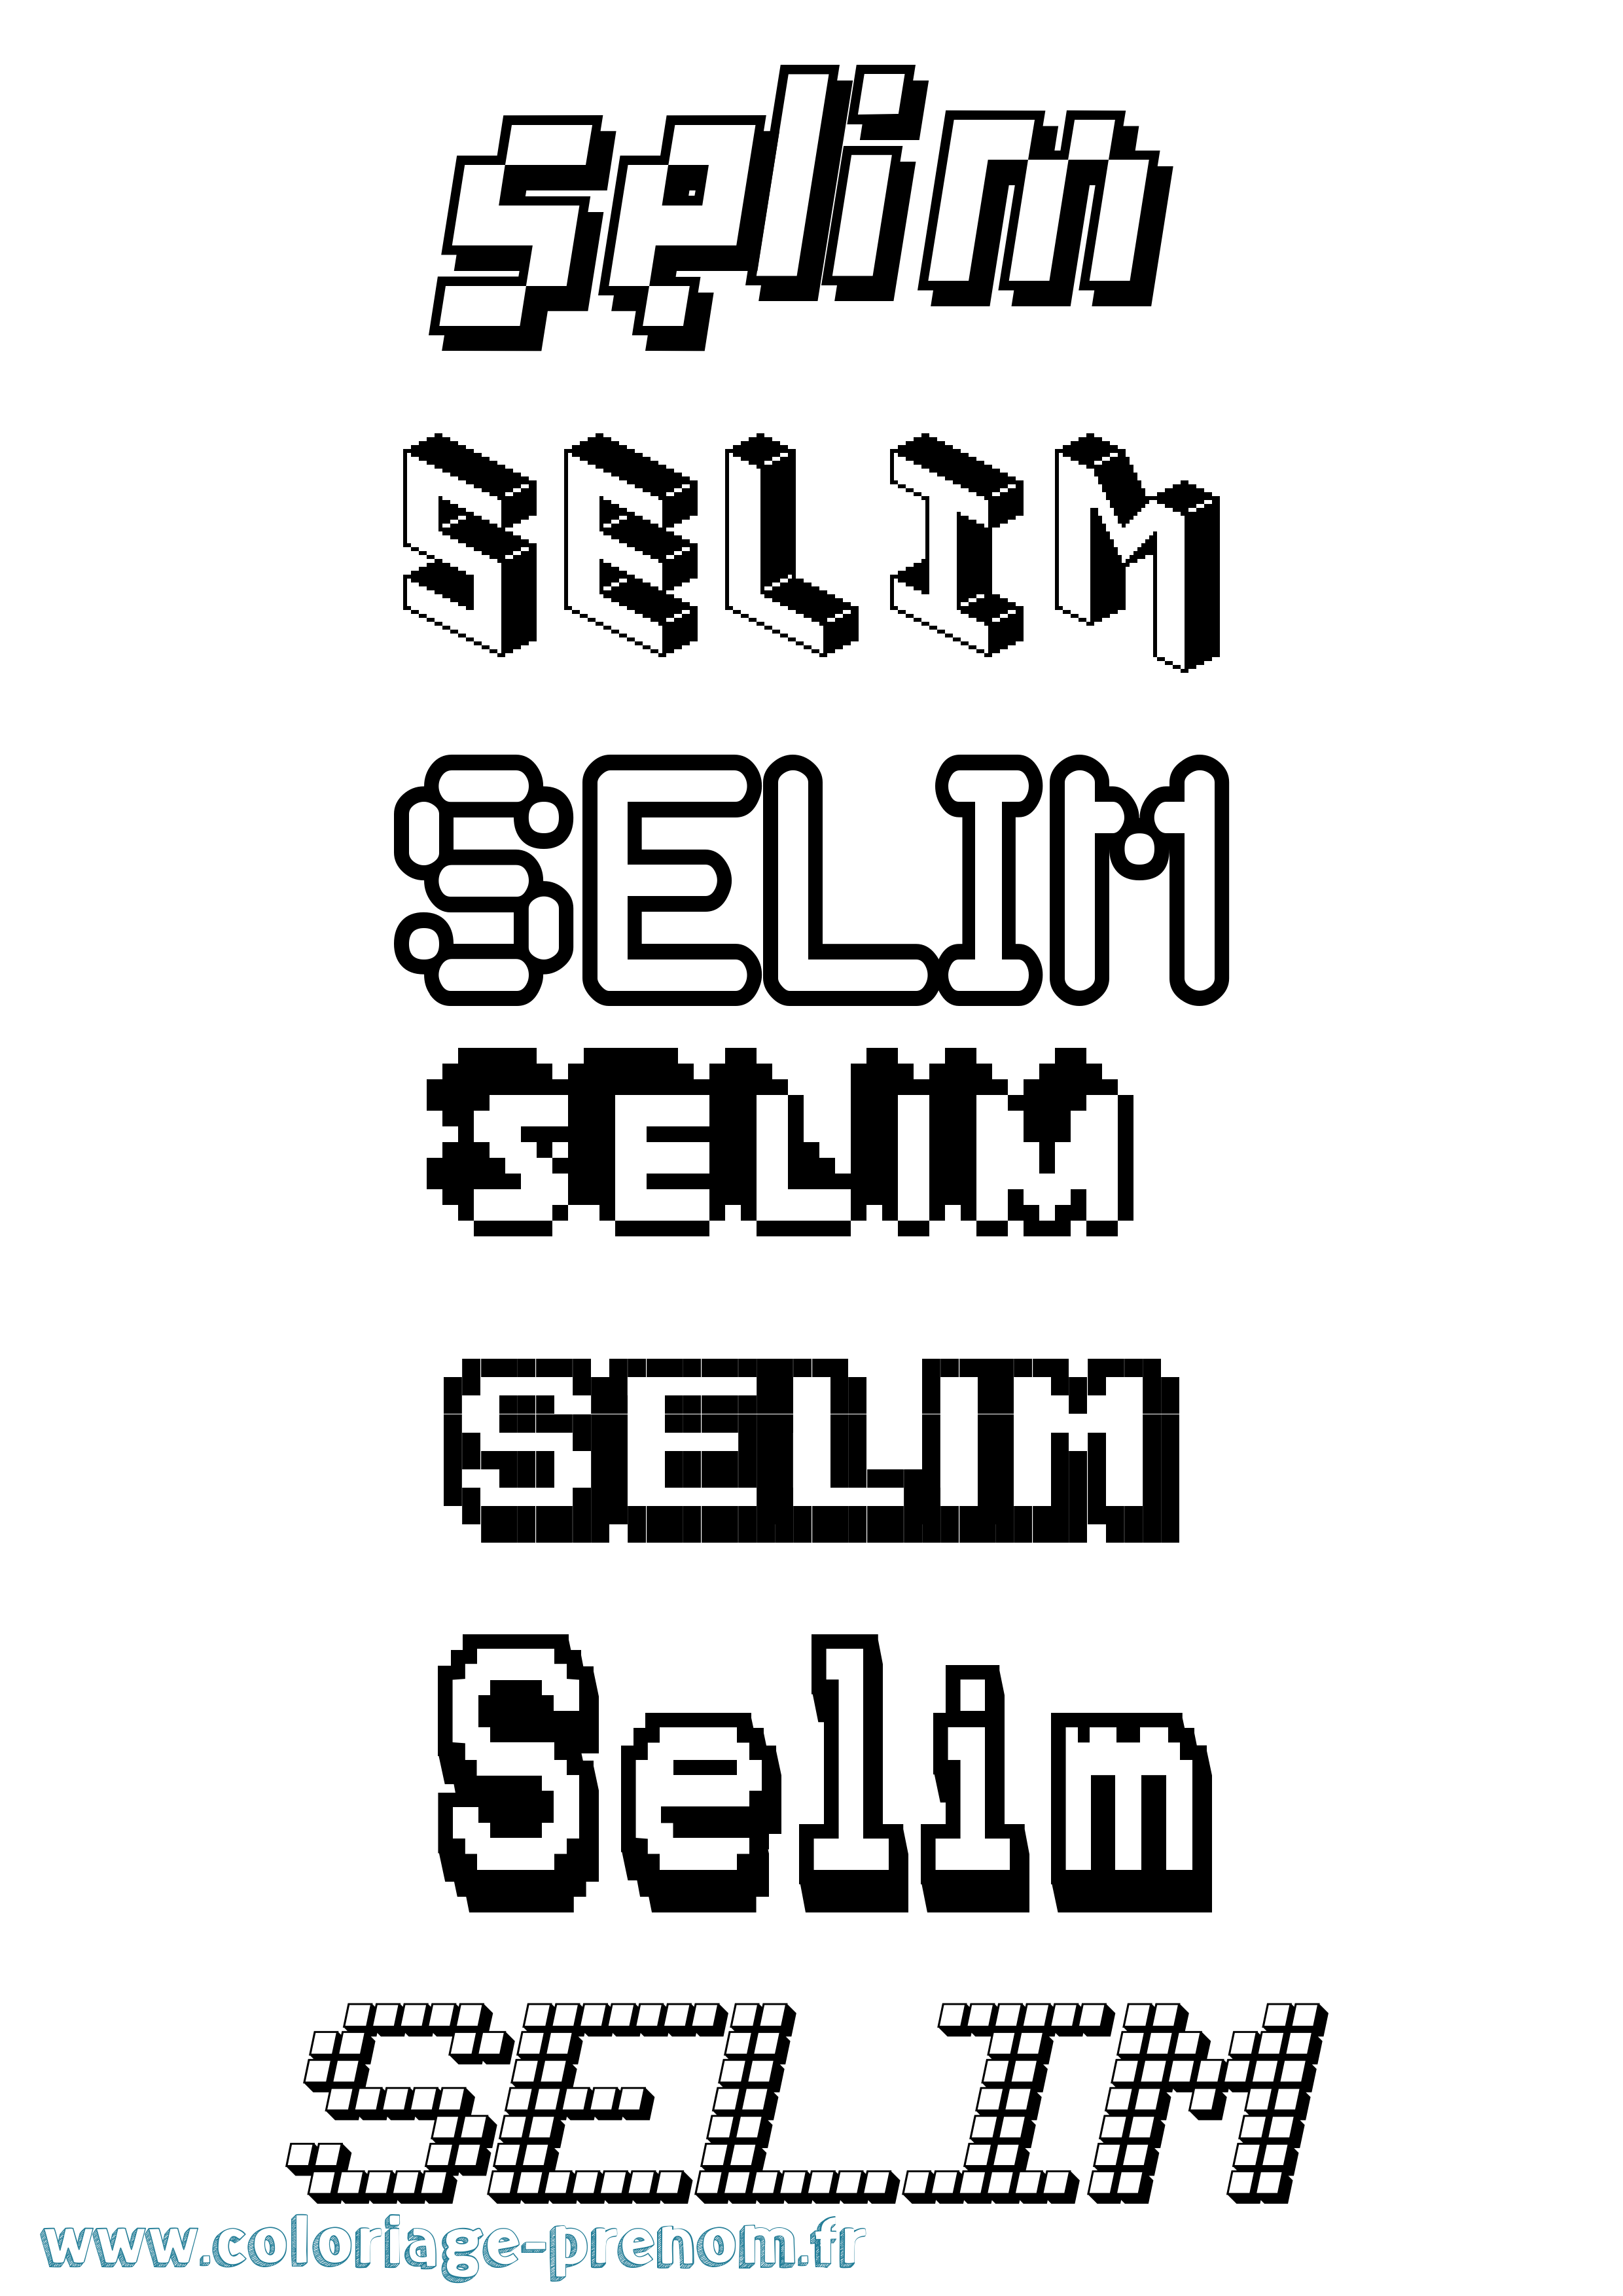 Coloriage prénom Selim